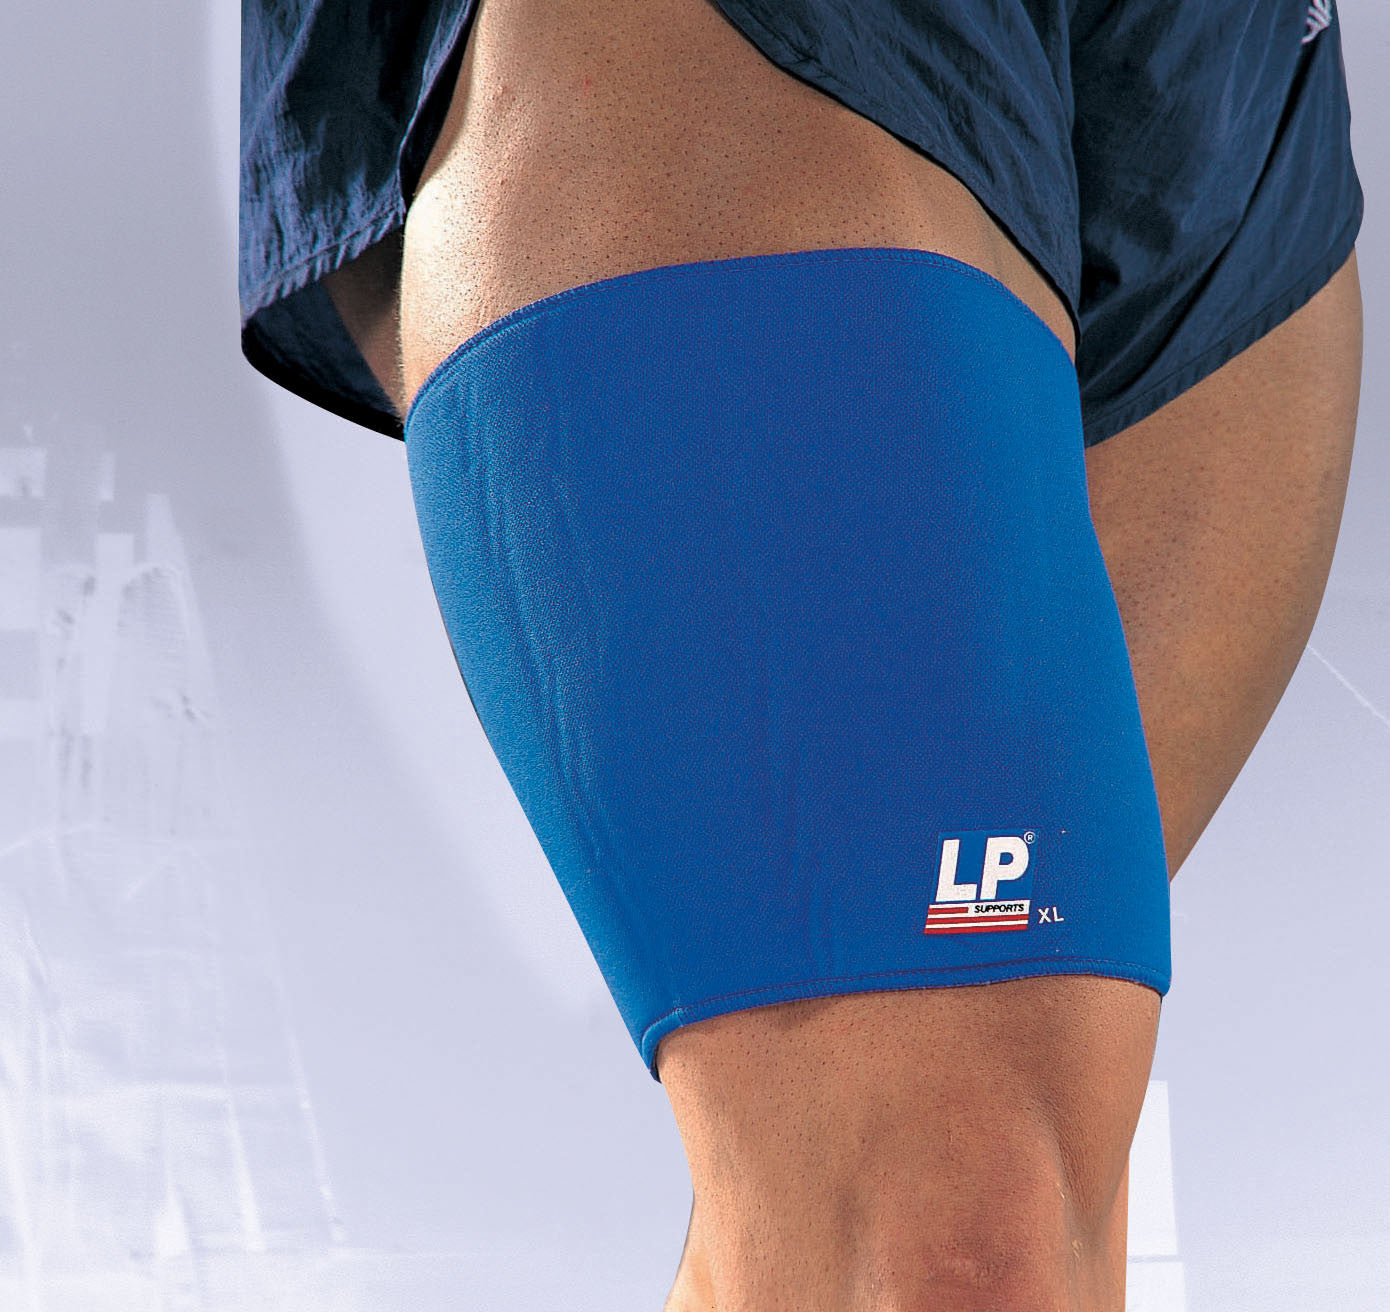 LP Neoprene Thigh Support